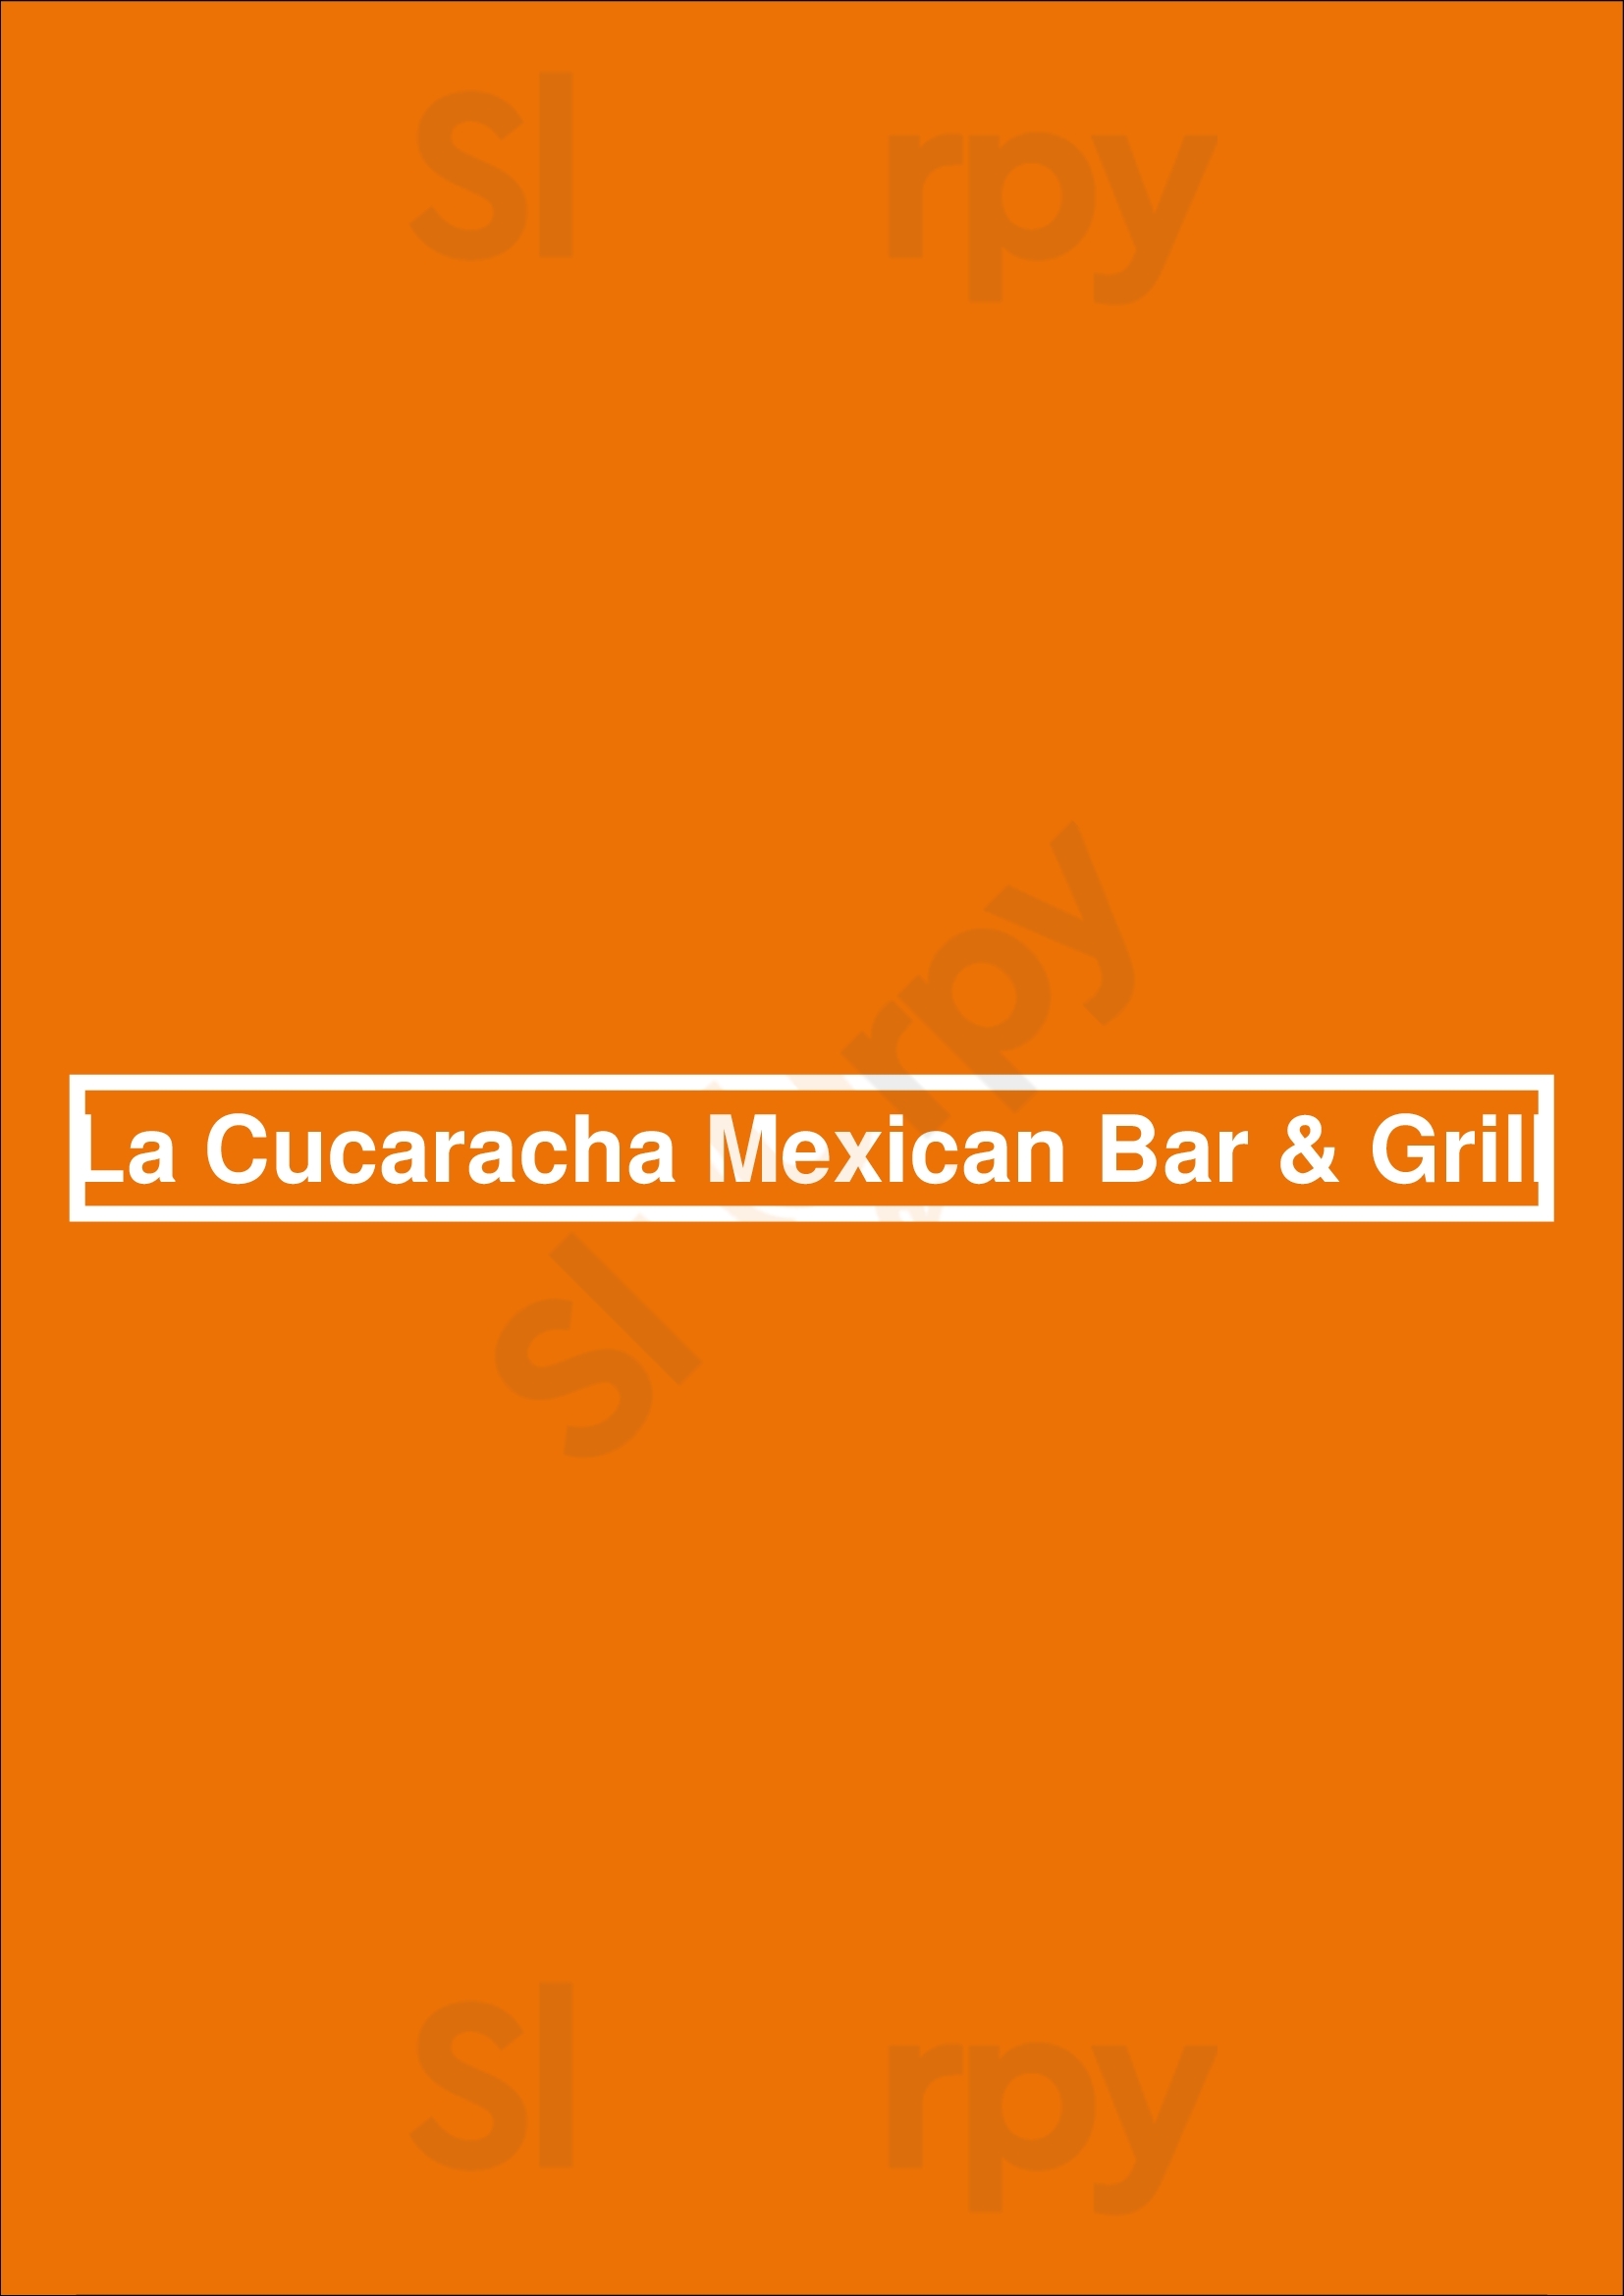 La Cucaracha Mexican Bar & Grill Honolulu Menu - 1